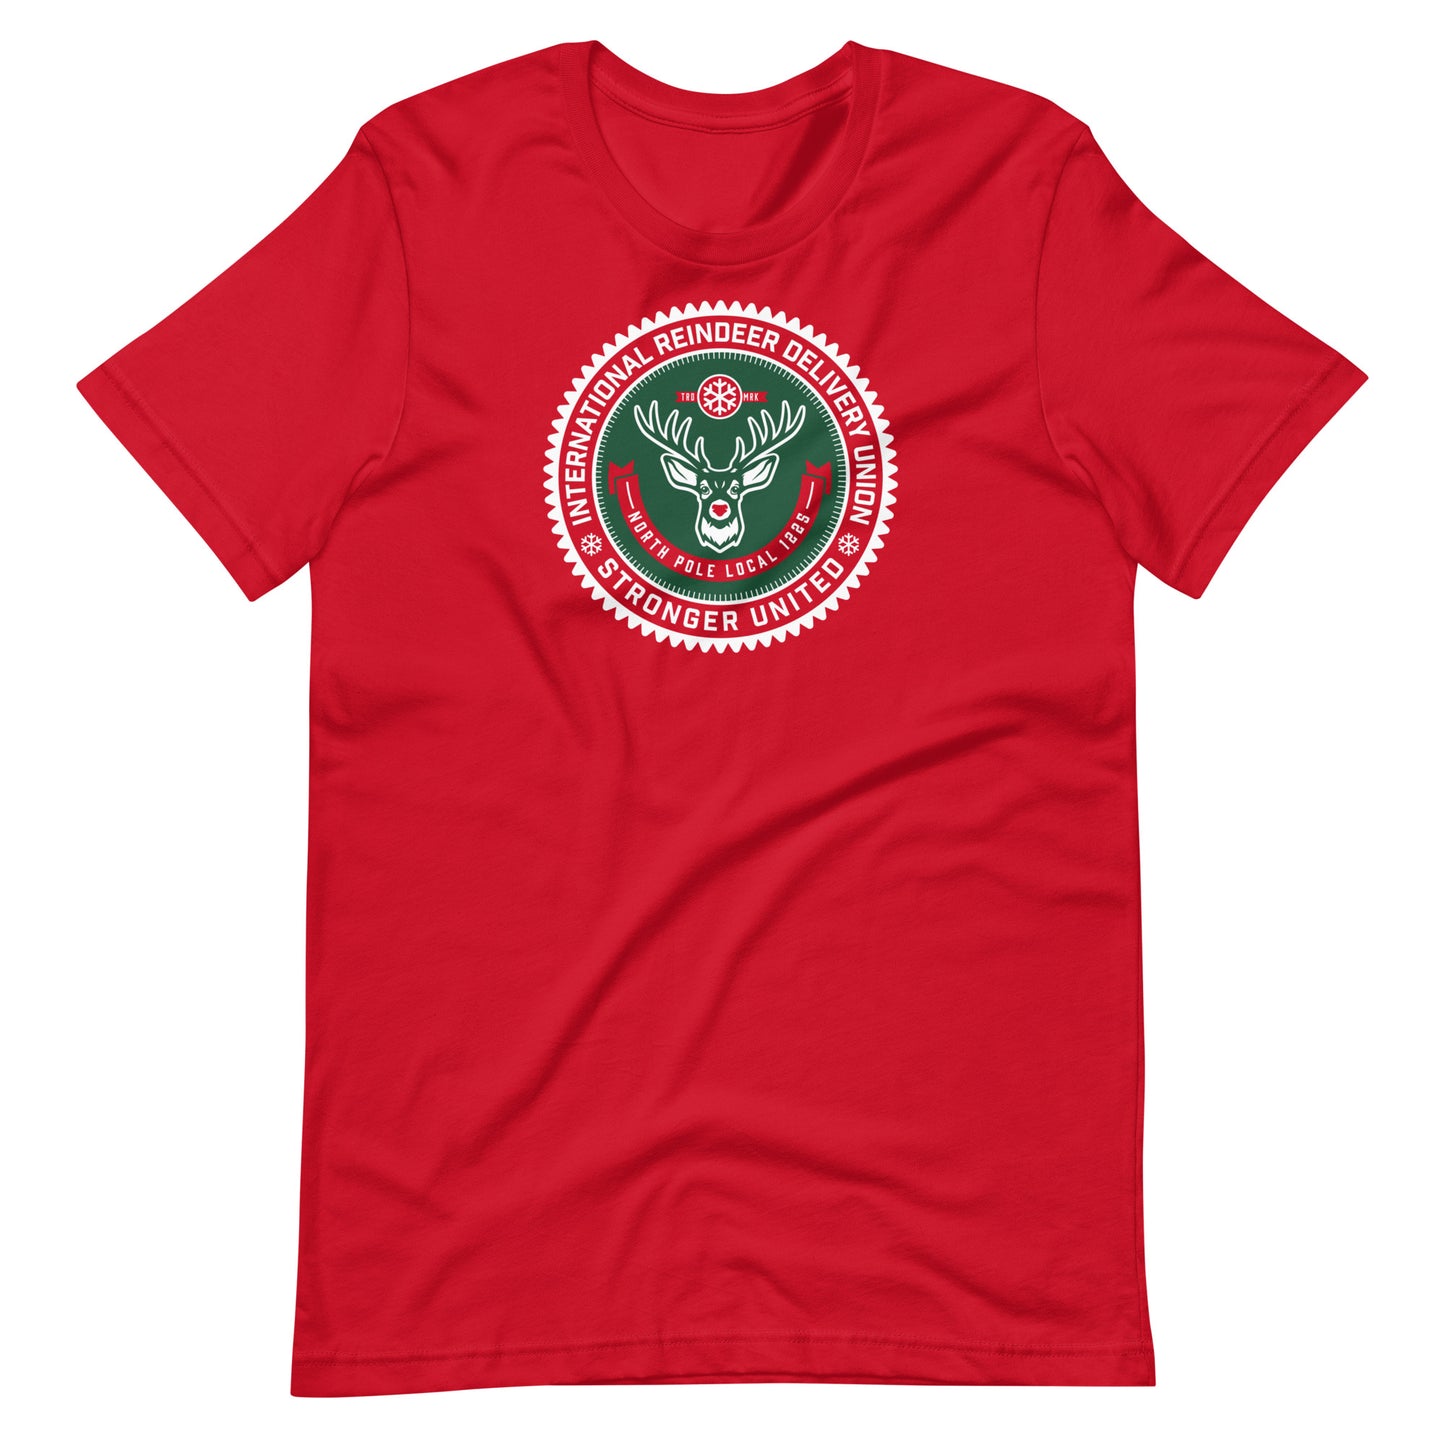 Reindeer Union t-shirt